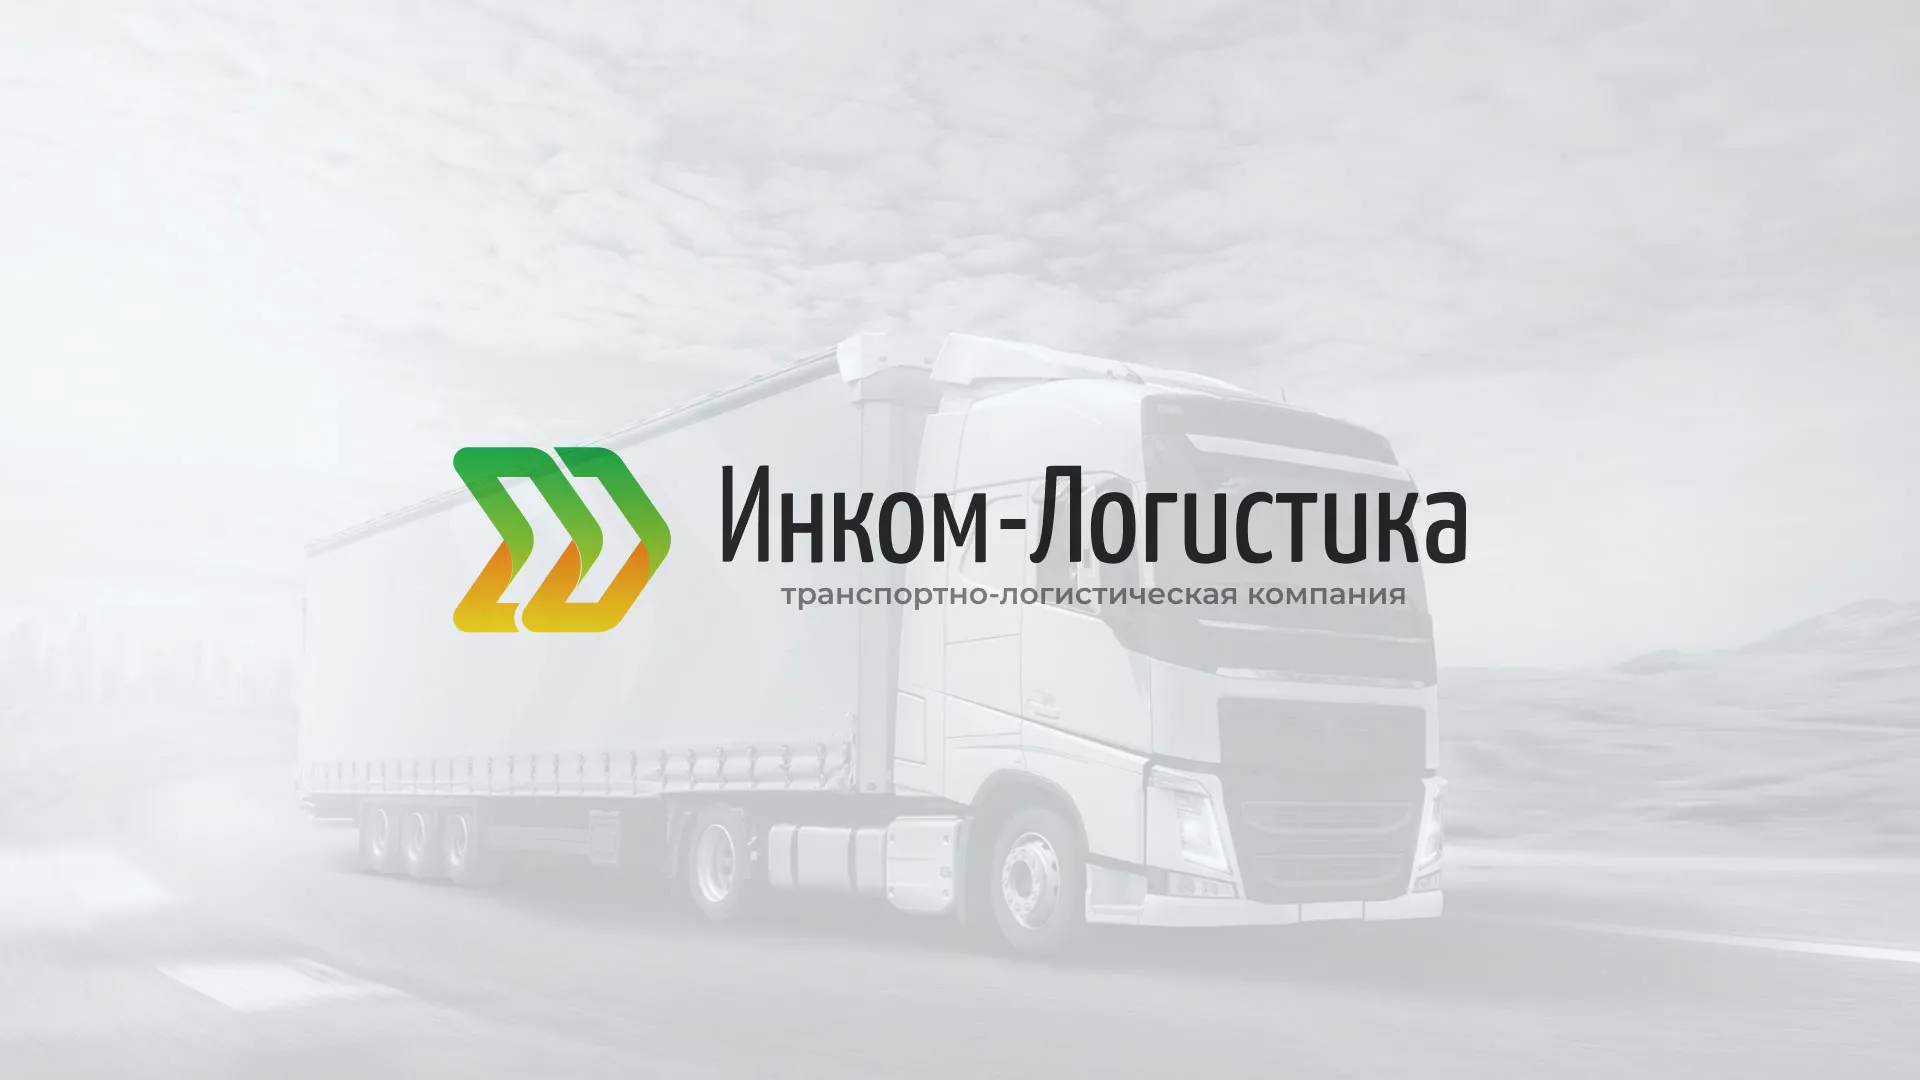 Разработка логотипа и сайта компании «Инком-Логистика» в Дзержинске